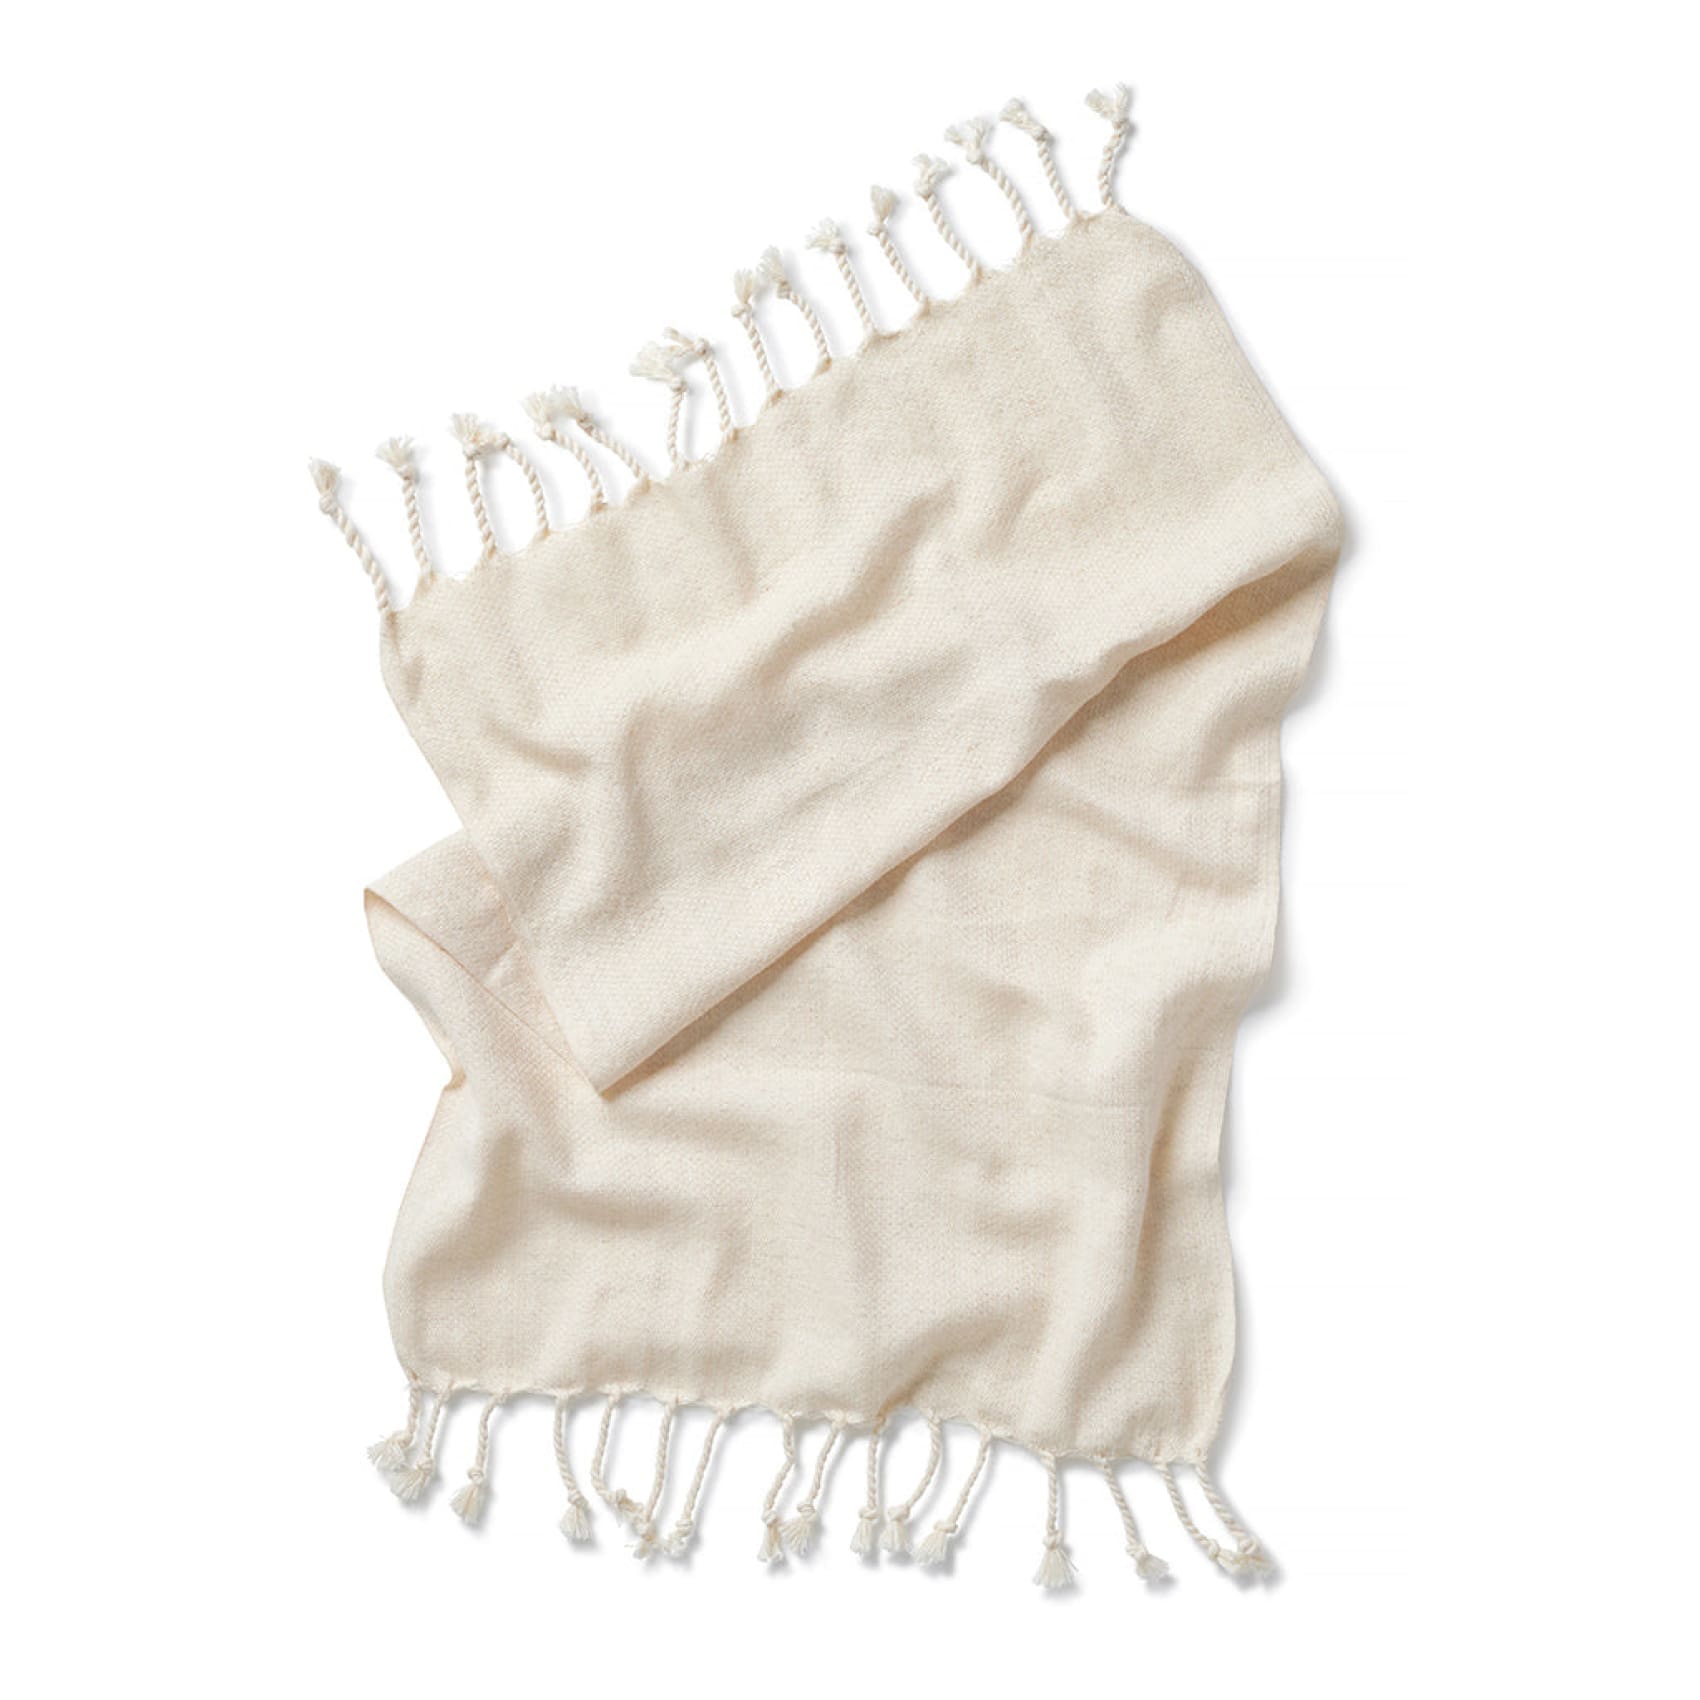 terazi-cotton-napkins-box-of-6-ash-chalk-hand-towels-tea-luks-linen-wood-sleeve-linens-702.jpg